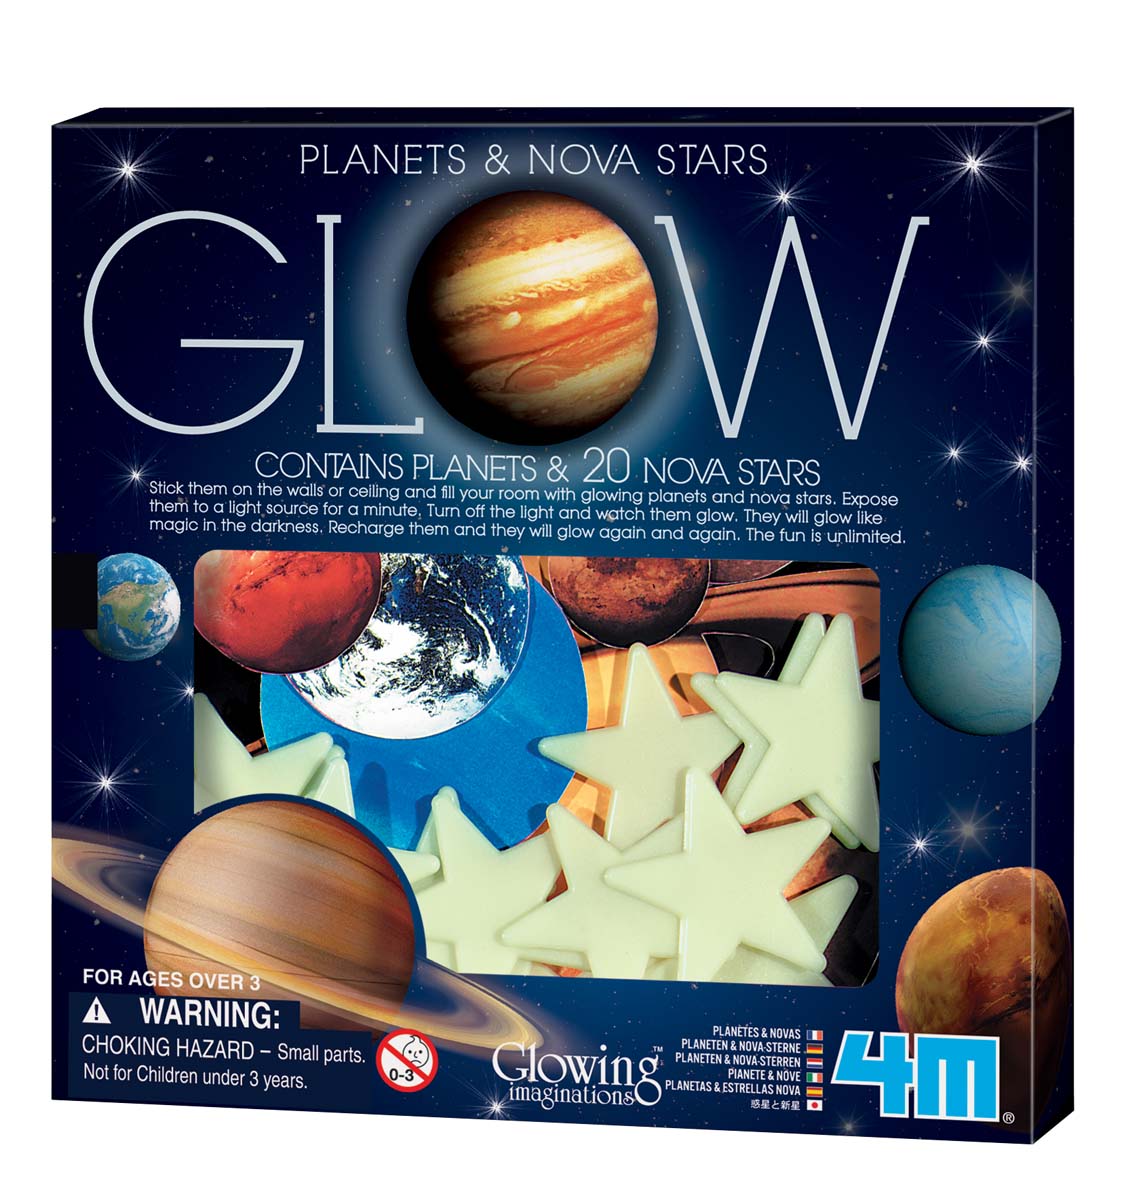 4M-Glowing Imagination Glow Planets & Nova Star In Box